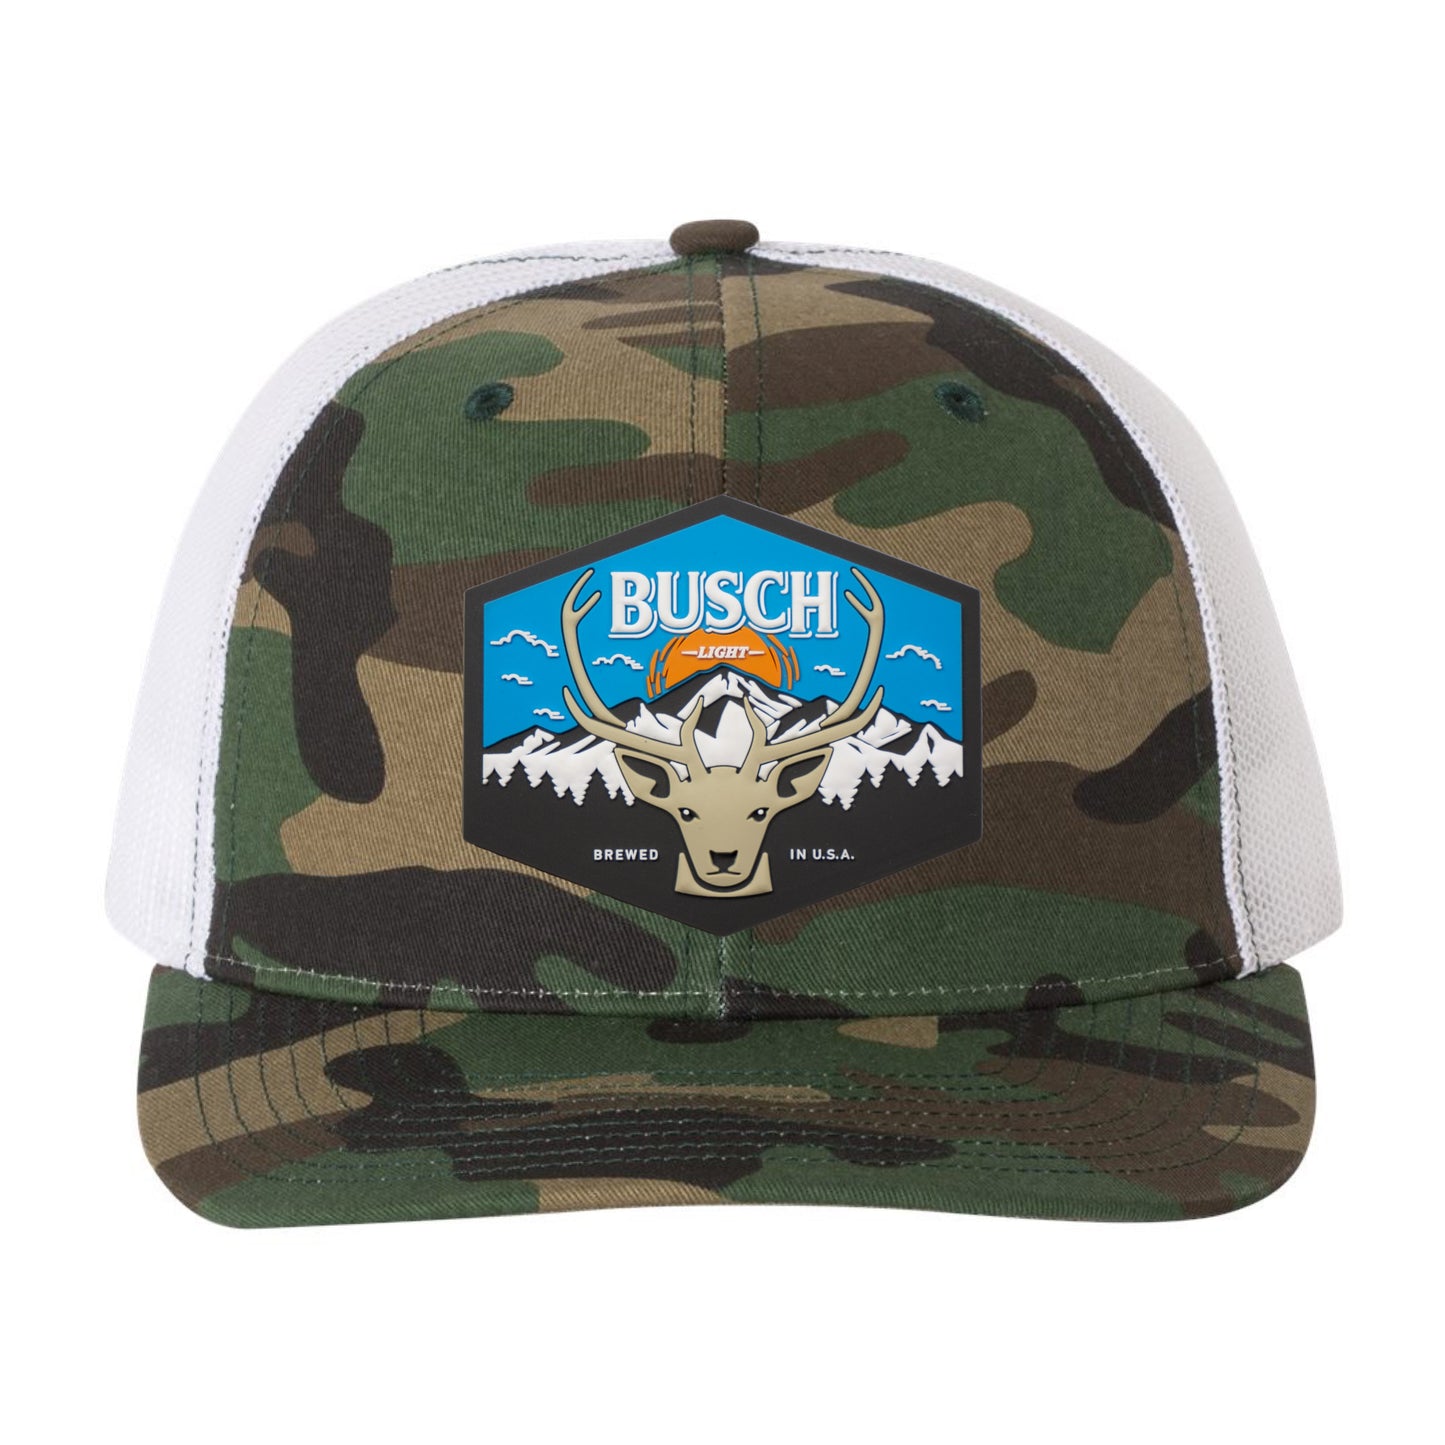 Busch Light Mountain Escape 3D Patterned Snapback Trucker Hat- Army Camo/ White - Ten Gallon Hat Co.